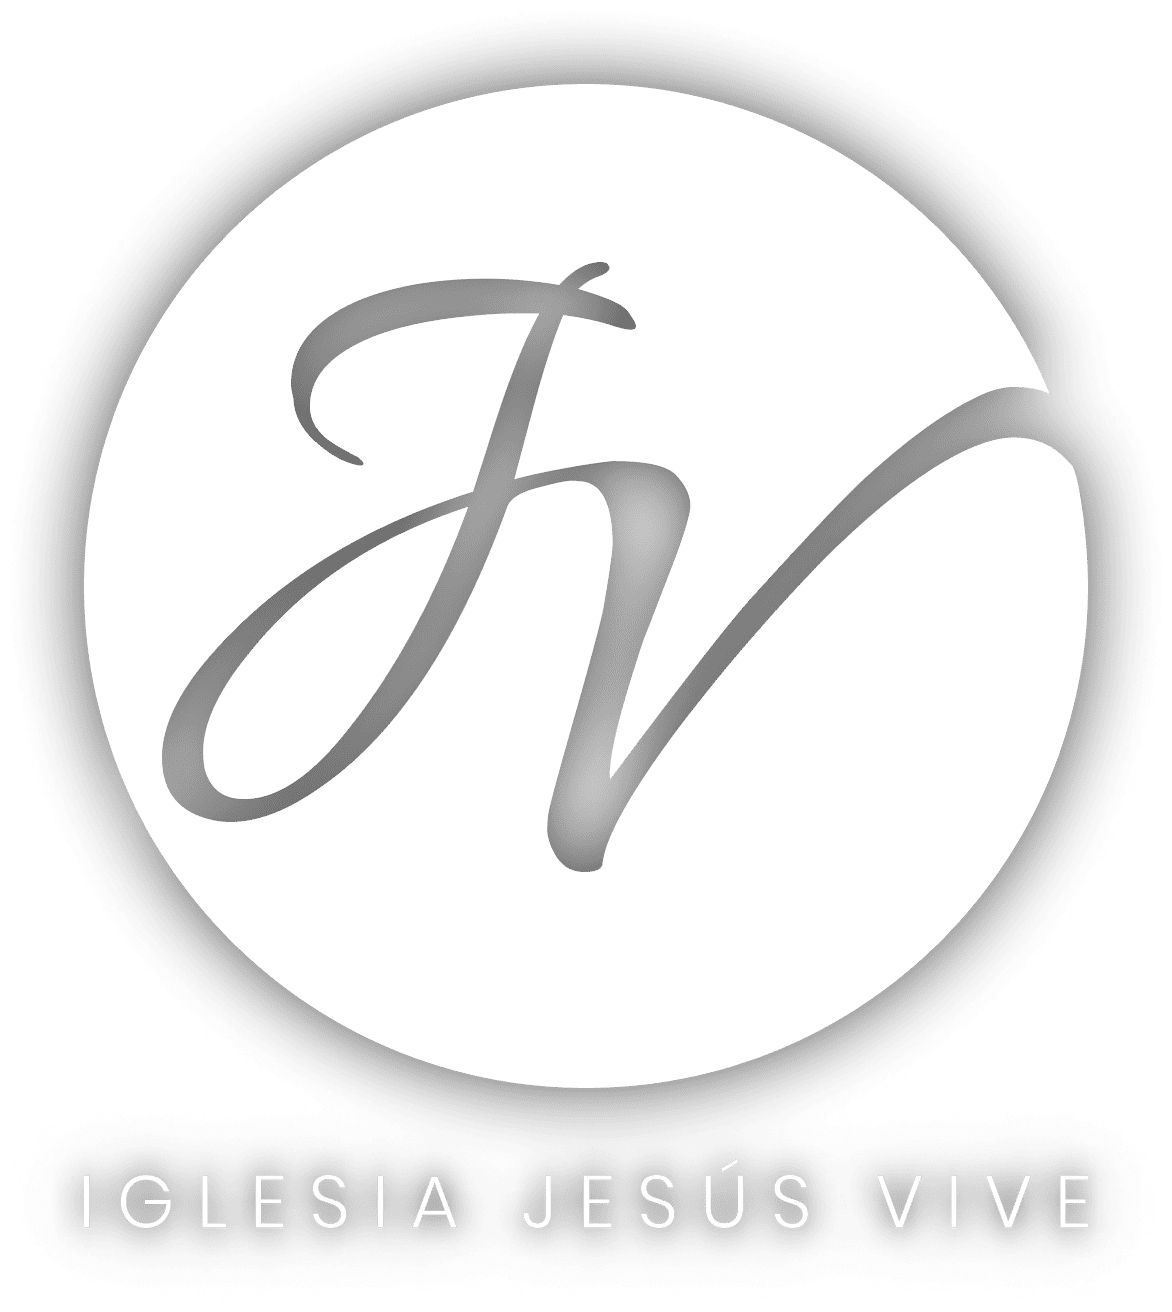 iglesia jesus vive aranjuez